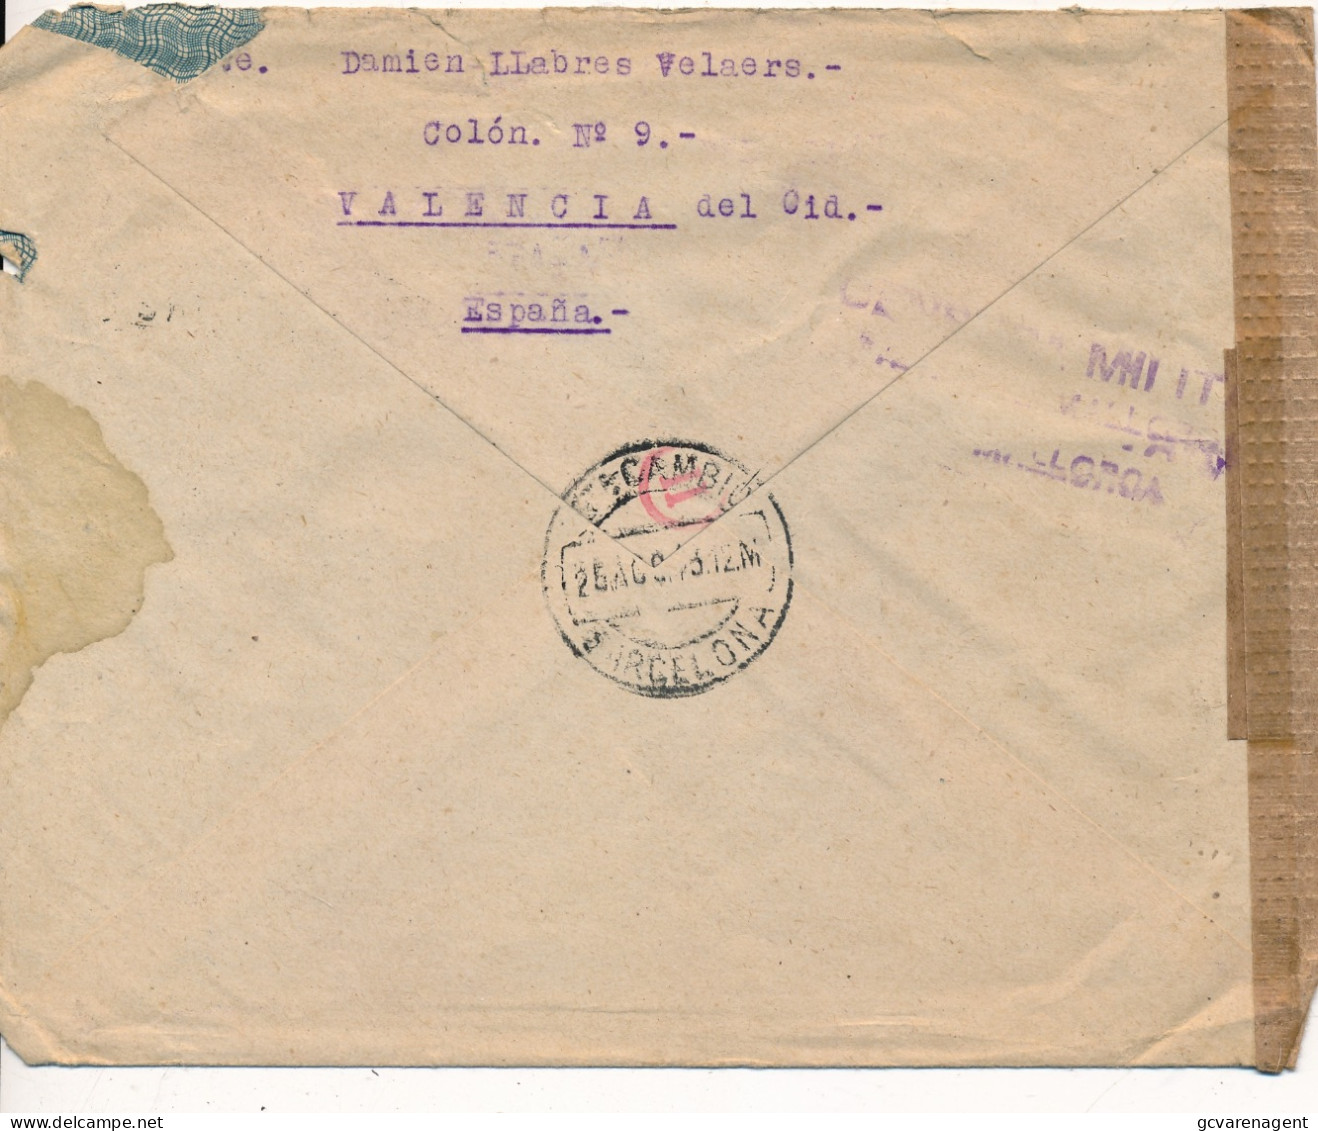 1943 NARANJERA UNIVERSAL  VALENCIA  - GEÖFFNET  -   TO GAND BELGICA    2 SCANS - Lettres & Documents